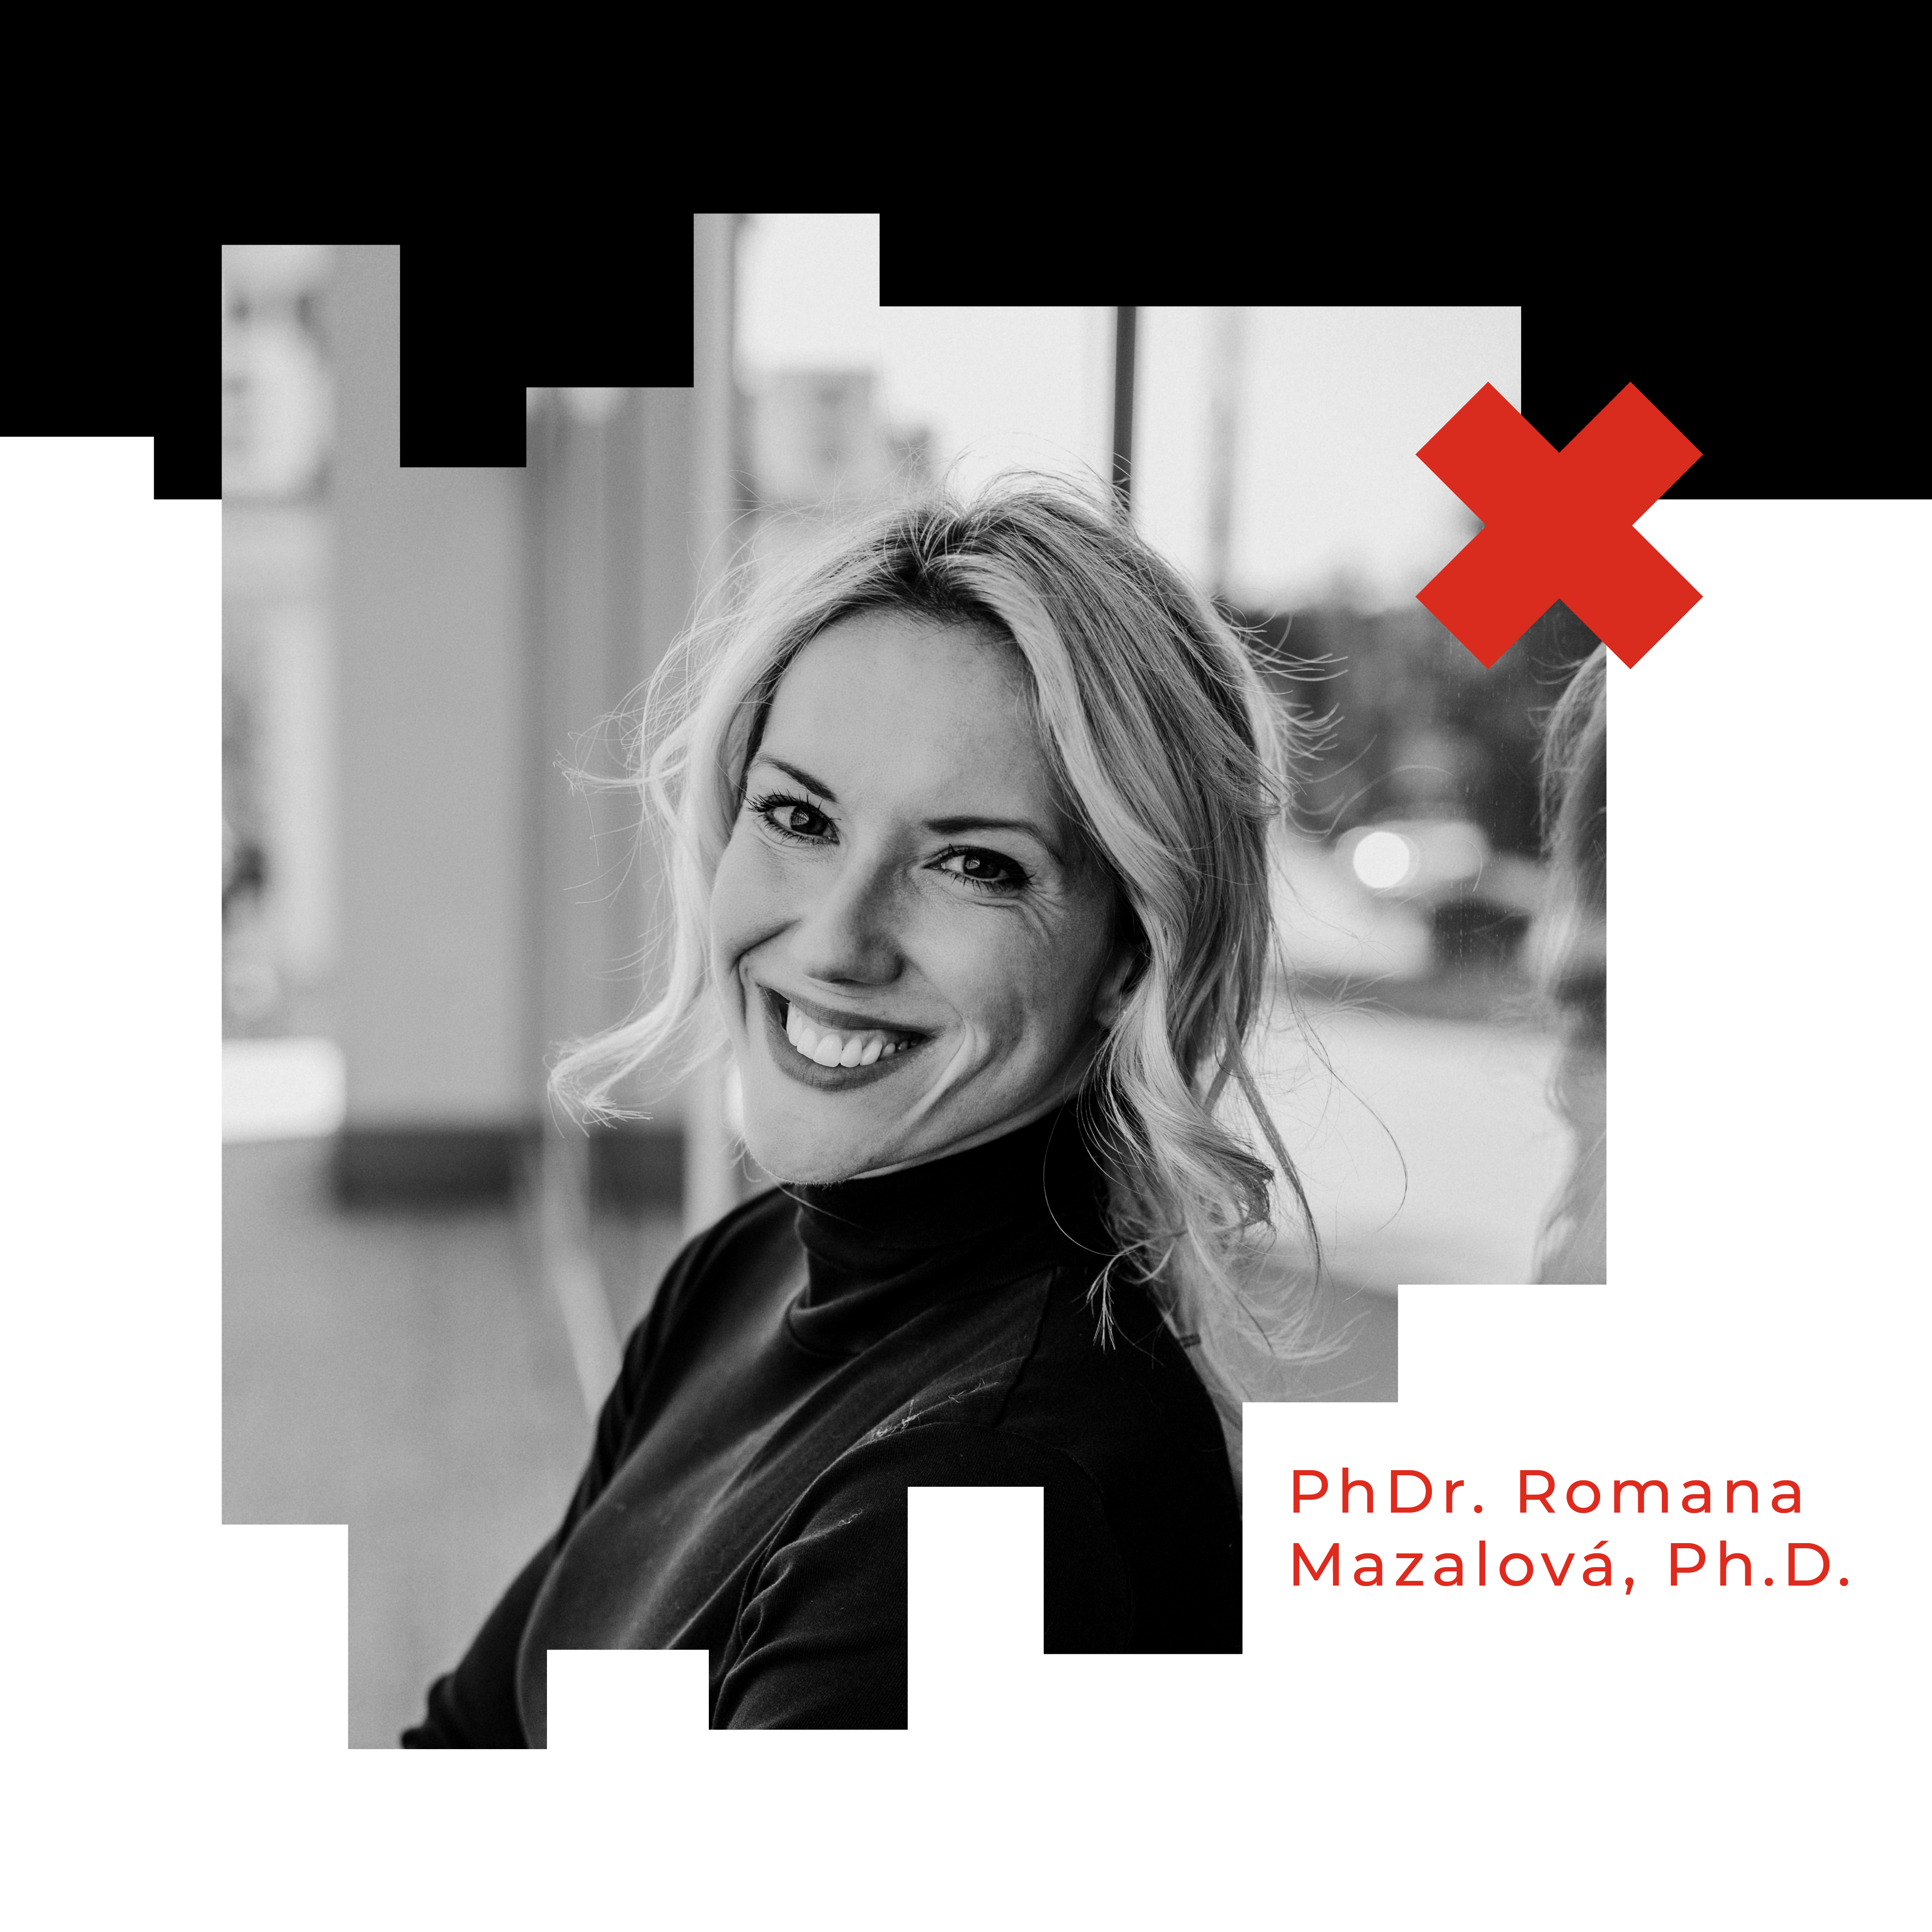 PhDr. Romana Mazalová, Ph.D.